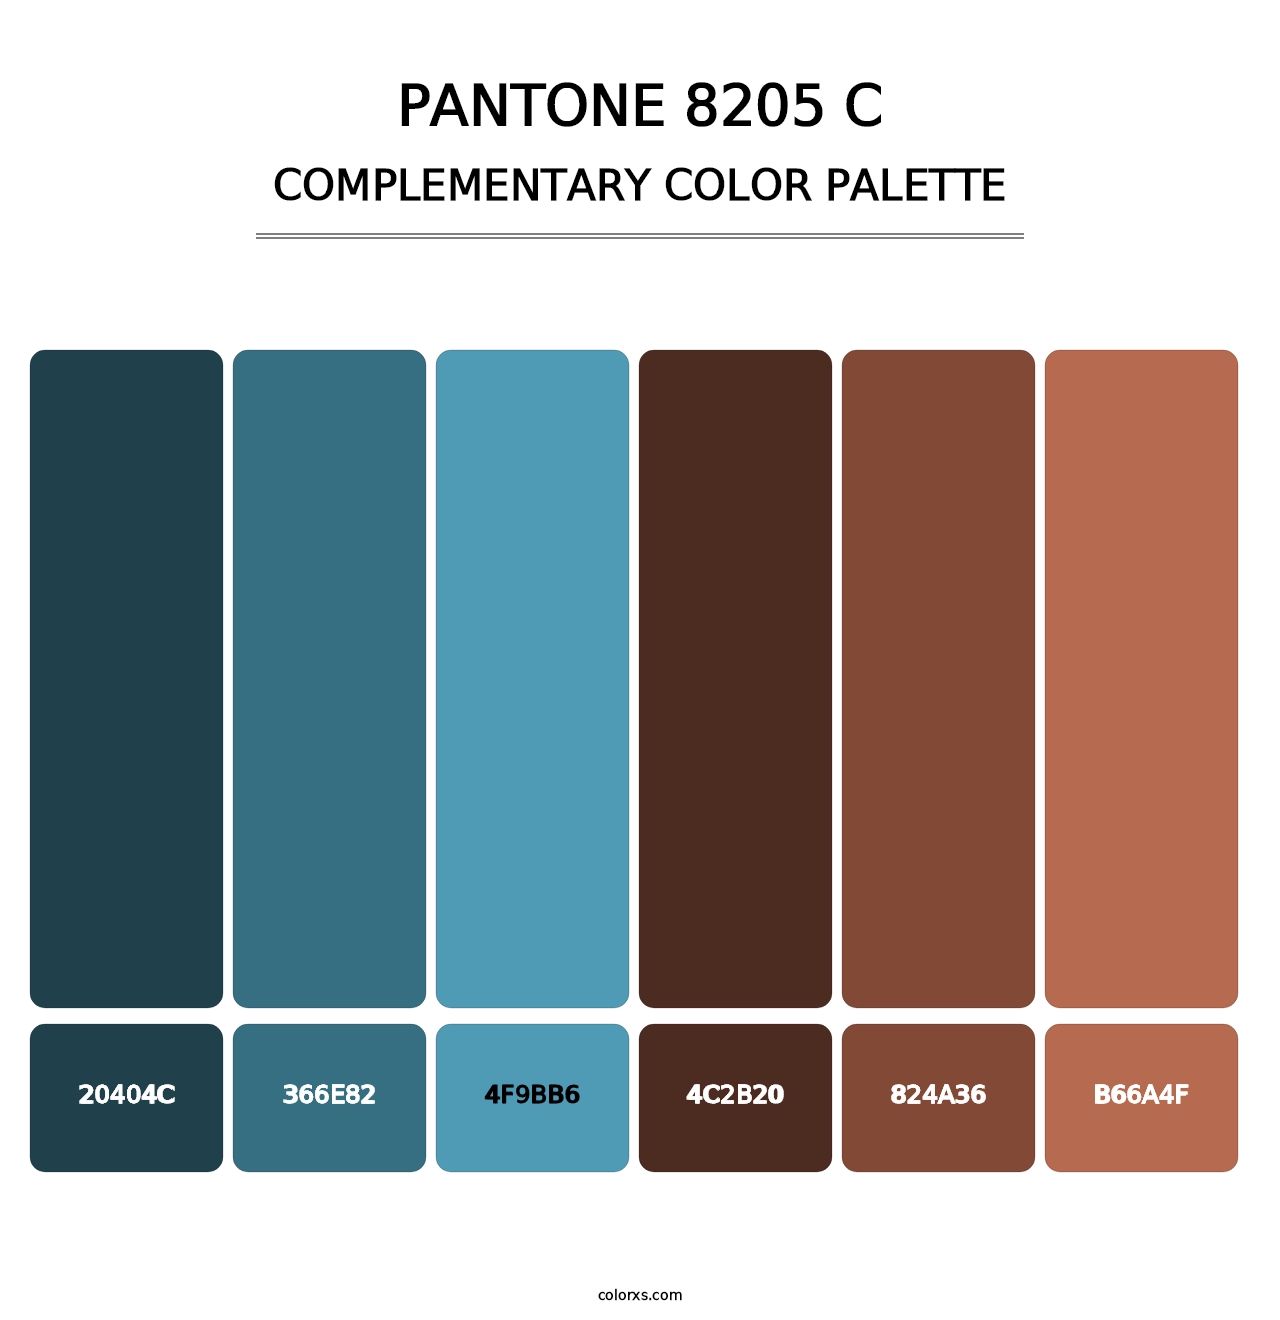 PANTONE 8205 C - Complementary Color Palette